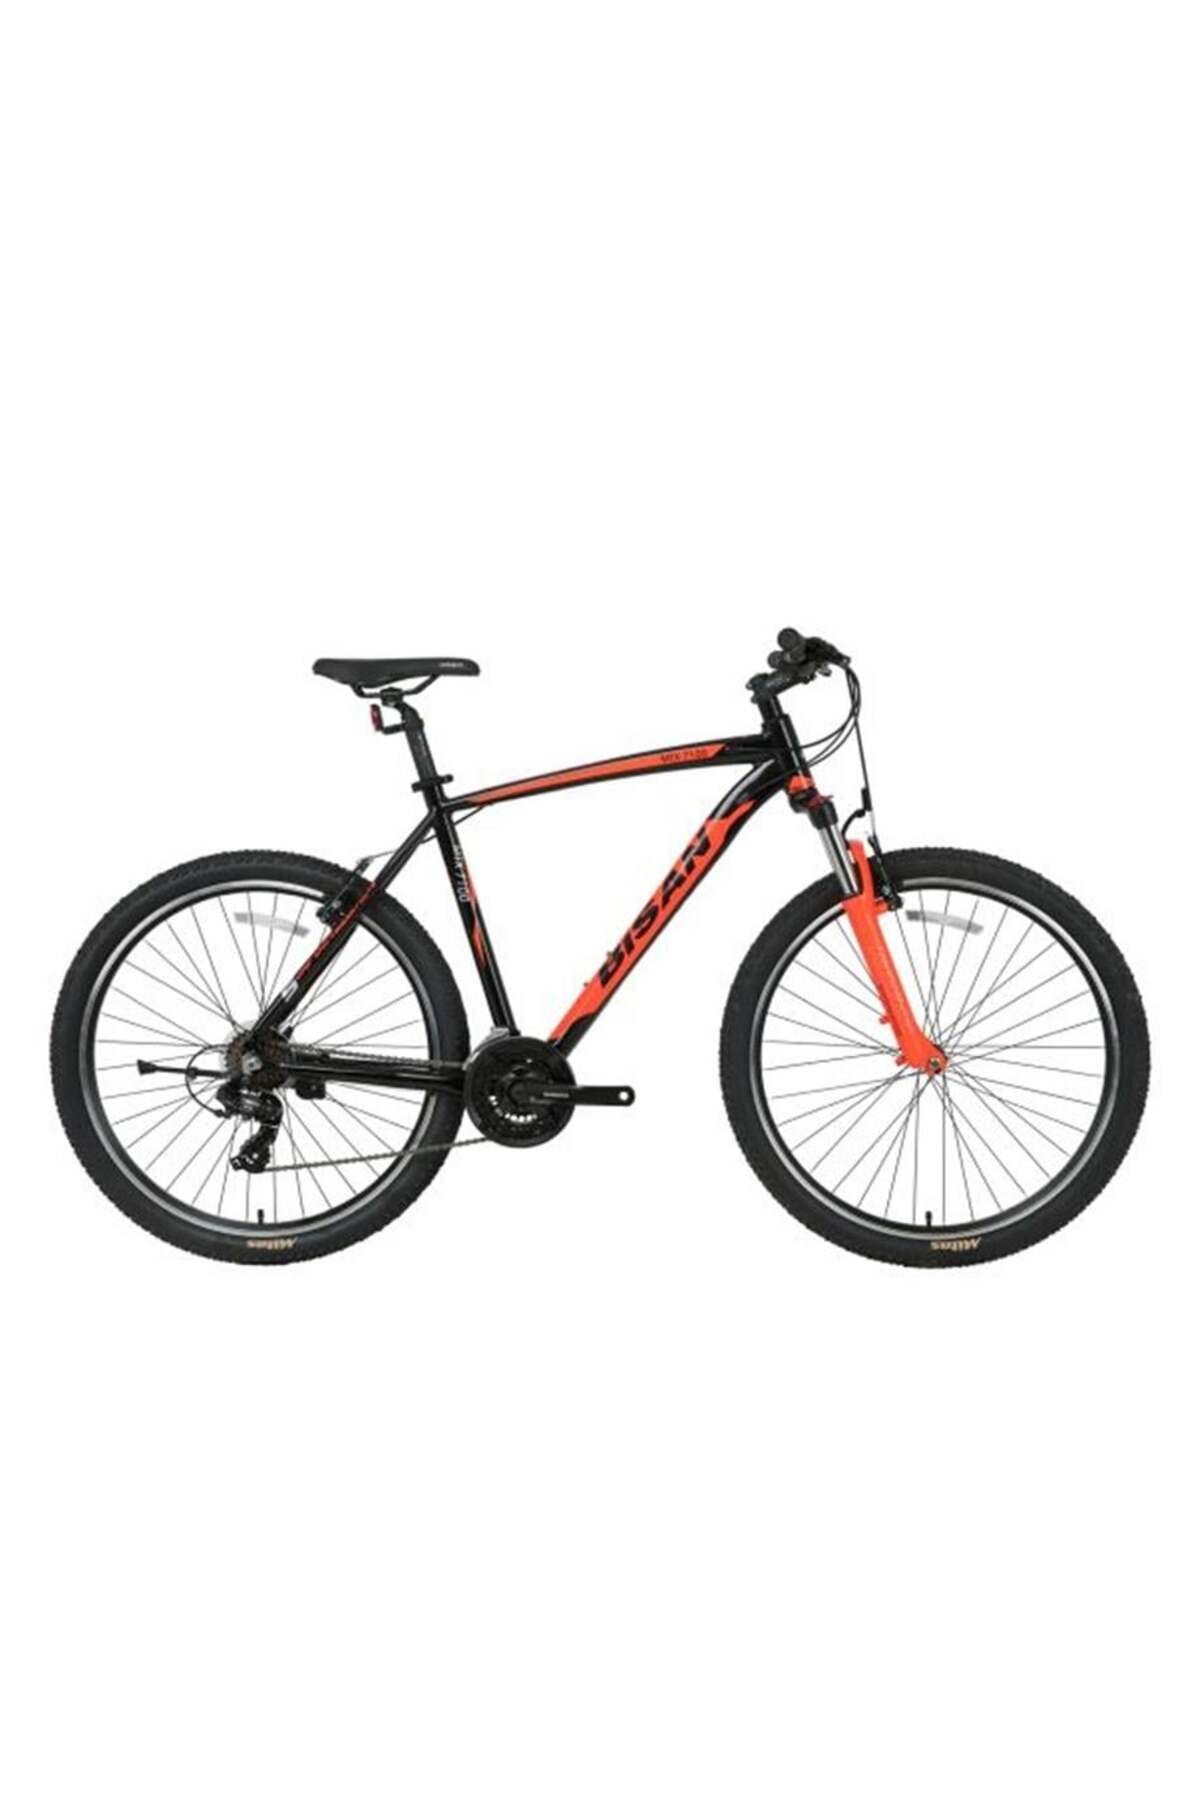 Bisan Mtx 7100 Erkek Dağ Bisikleti 53cm V 27.5 Jant 21 Vites Siyah Kırmızı